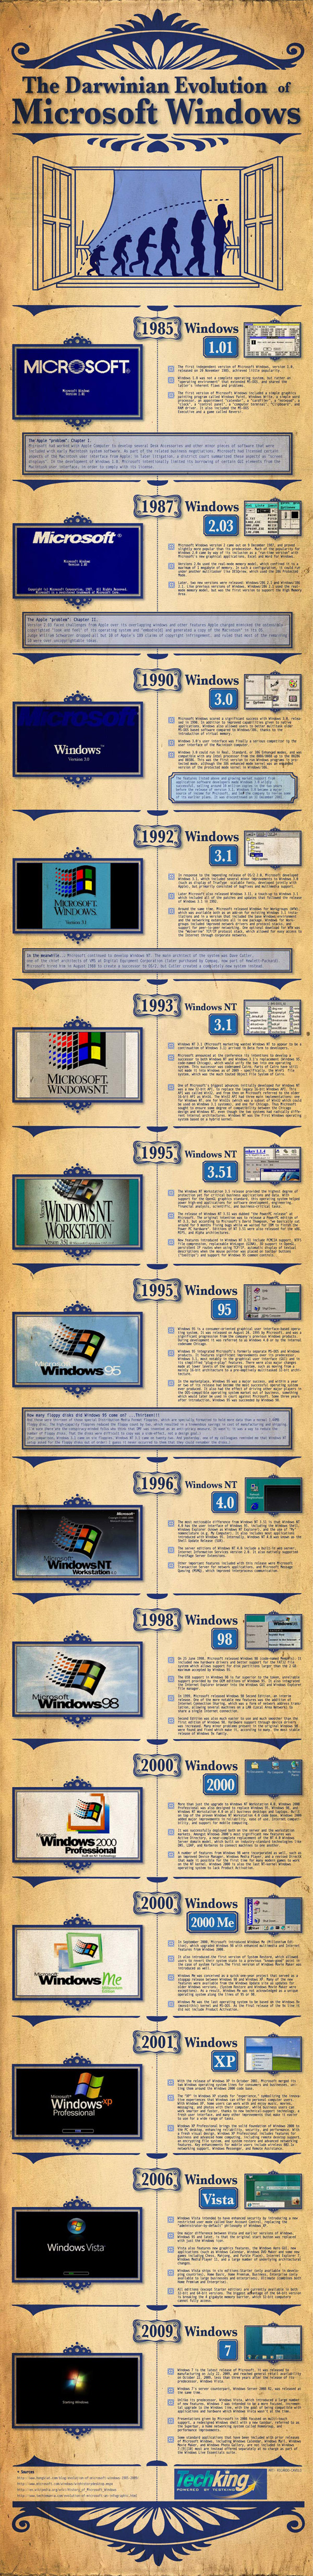 The Darwinian Evolution of Windows